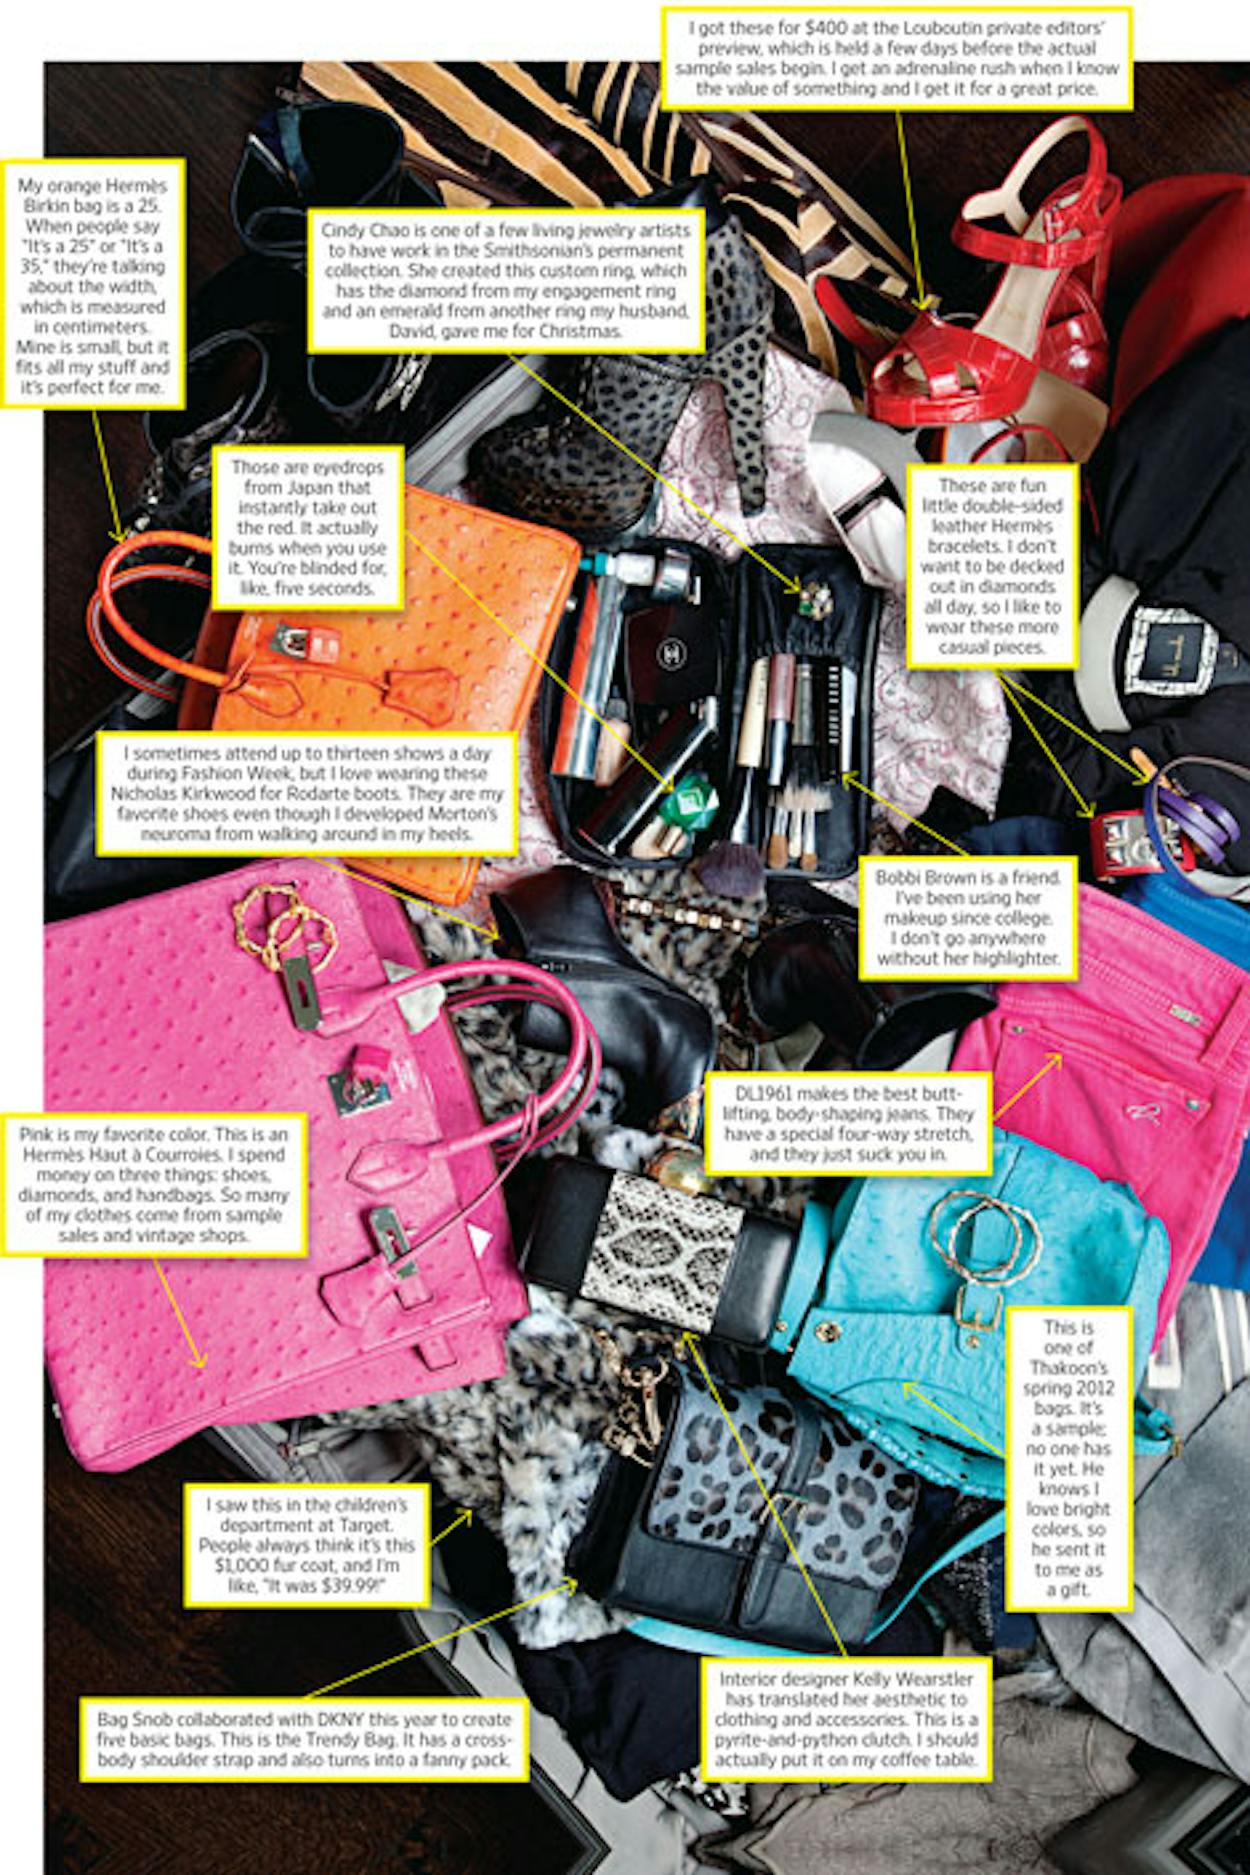 Bag Snob Bloggers Team Up With DKNY